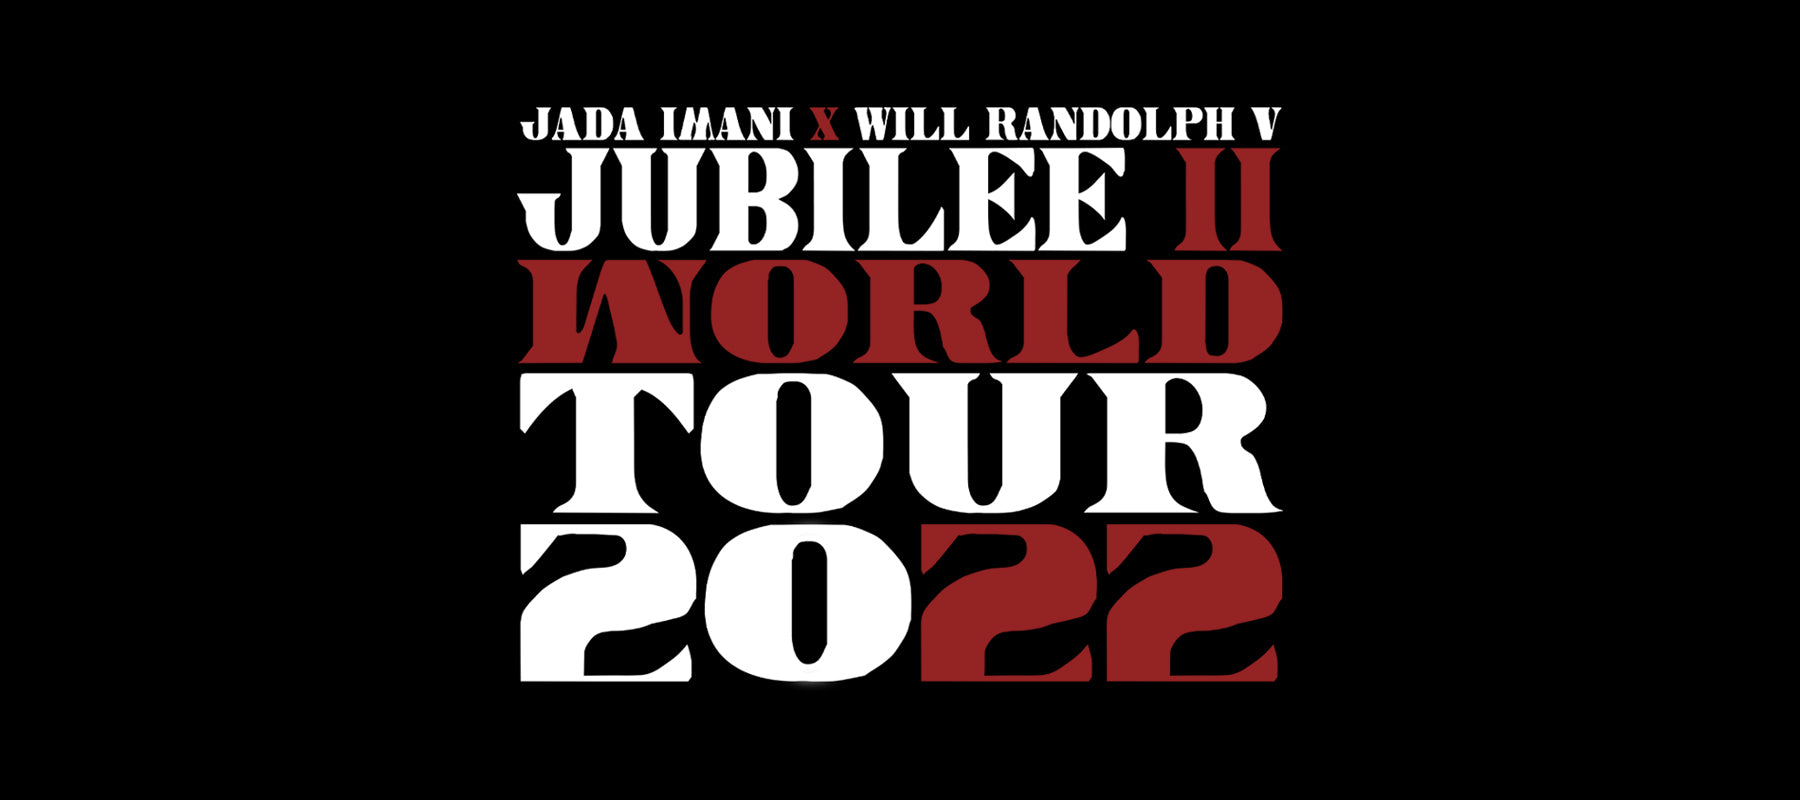 Jubilee World Tour 2022 Jada Imani cover art